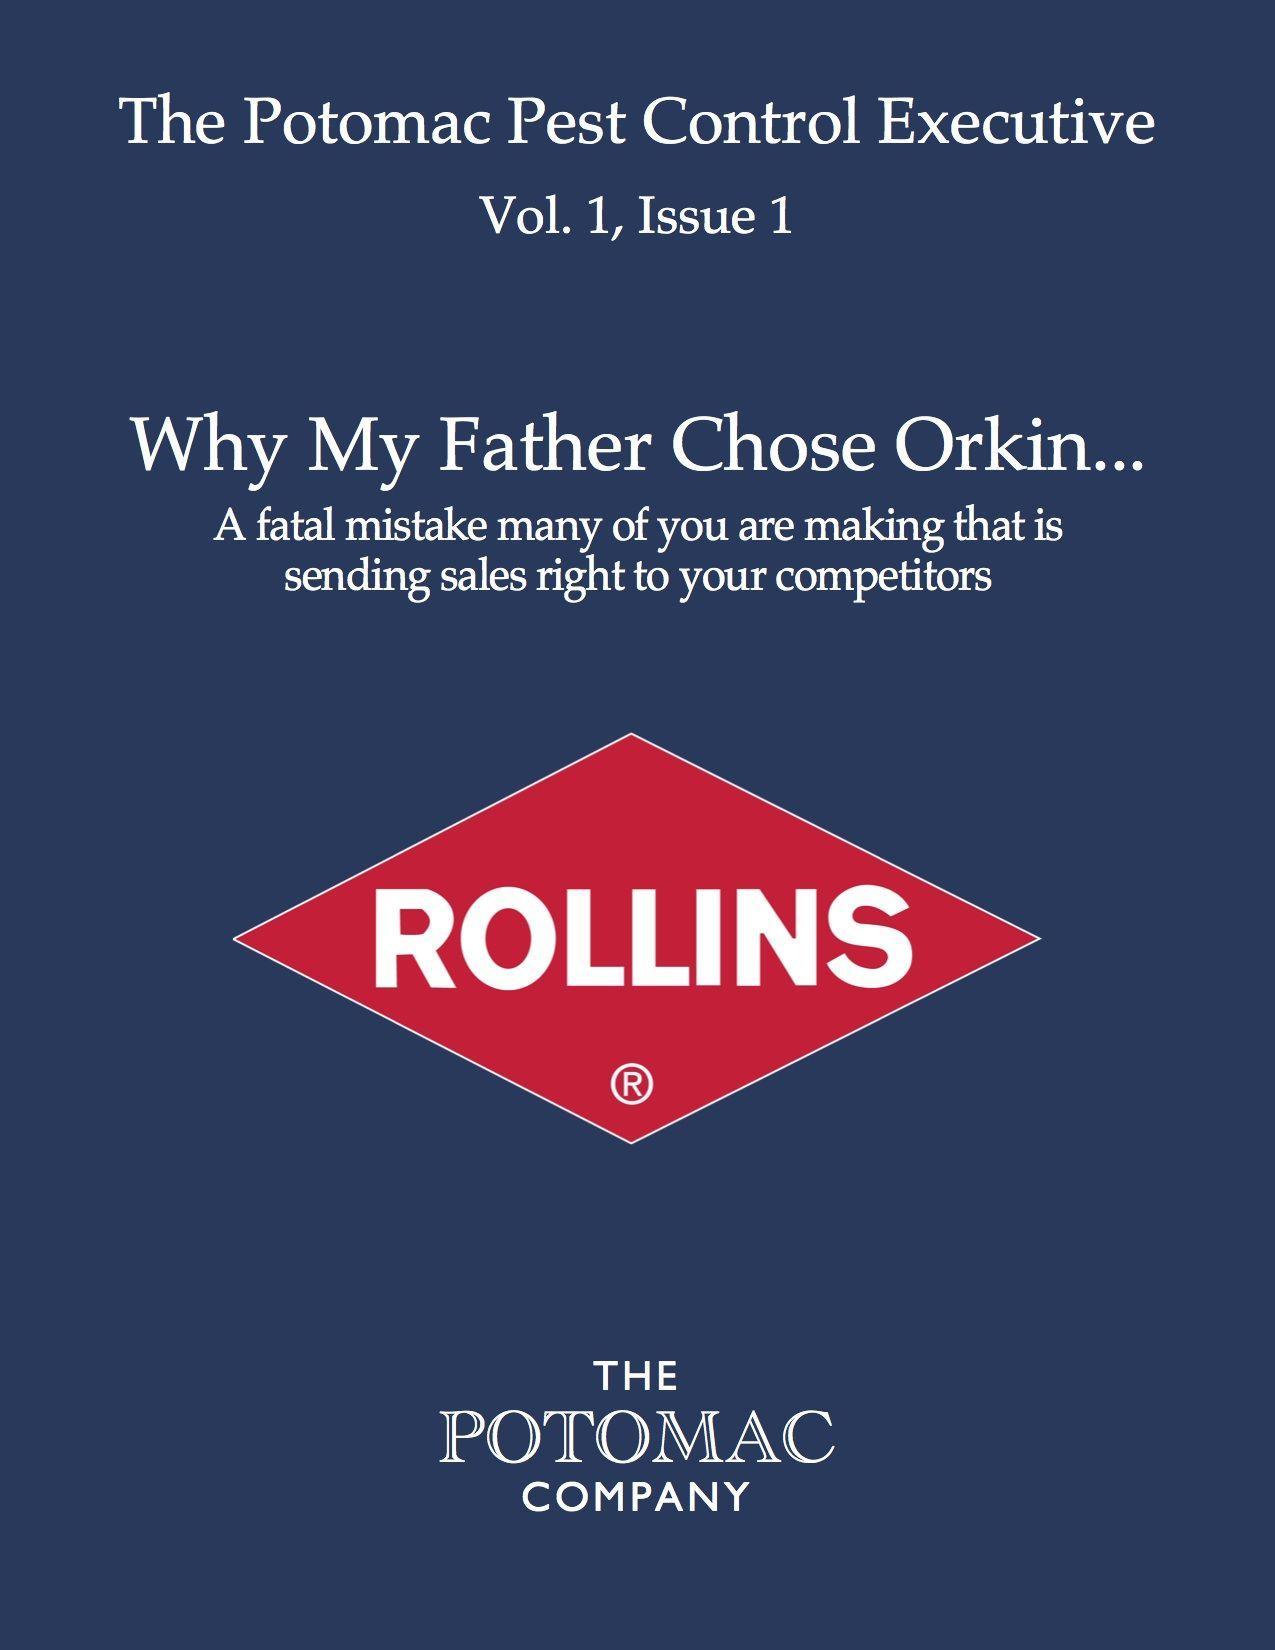 Orkin Logo - Why My Father Chose Orkin... - Potomac Pest Control Group